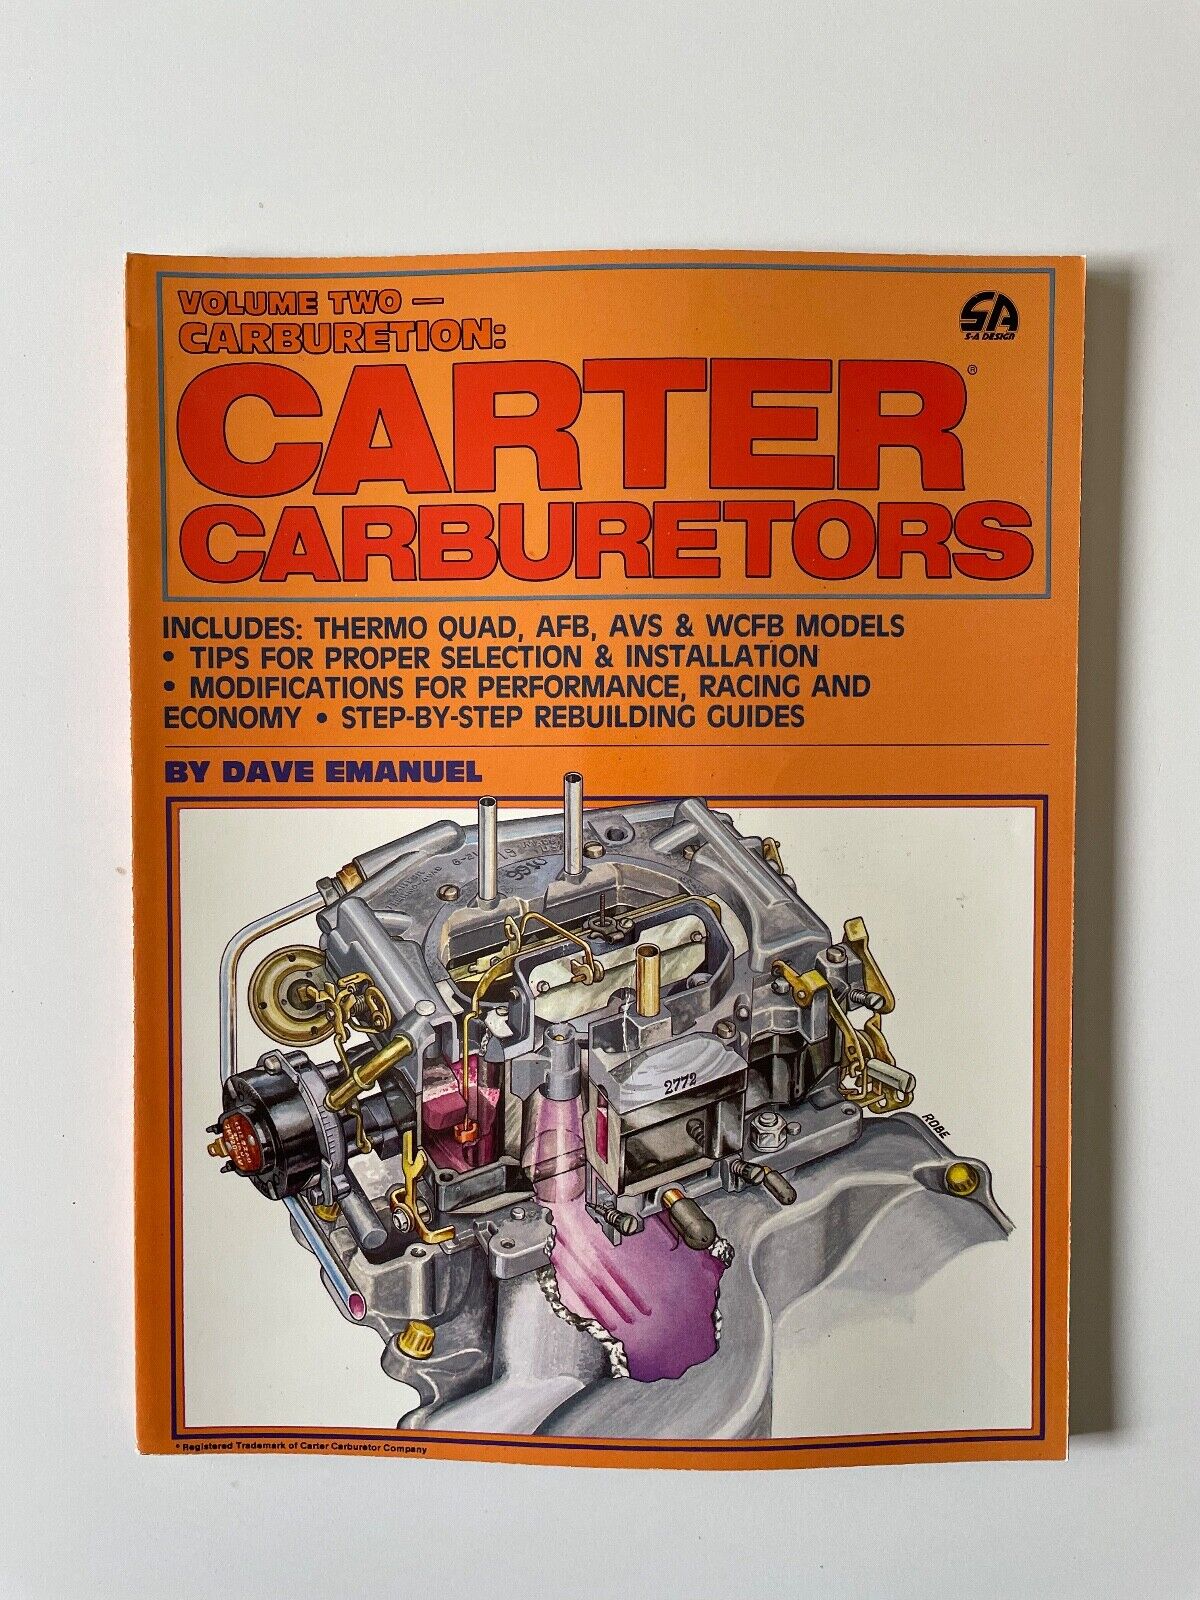 1983 CARTER Carburetors Volume Two by Dave Emanuel Thermal Quad AFB AVS WCFB